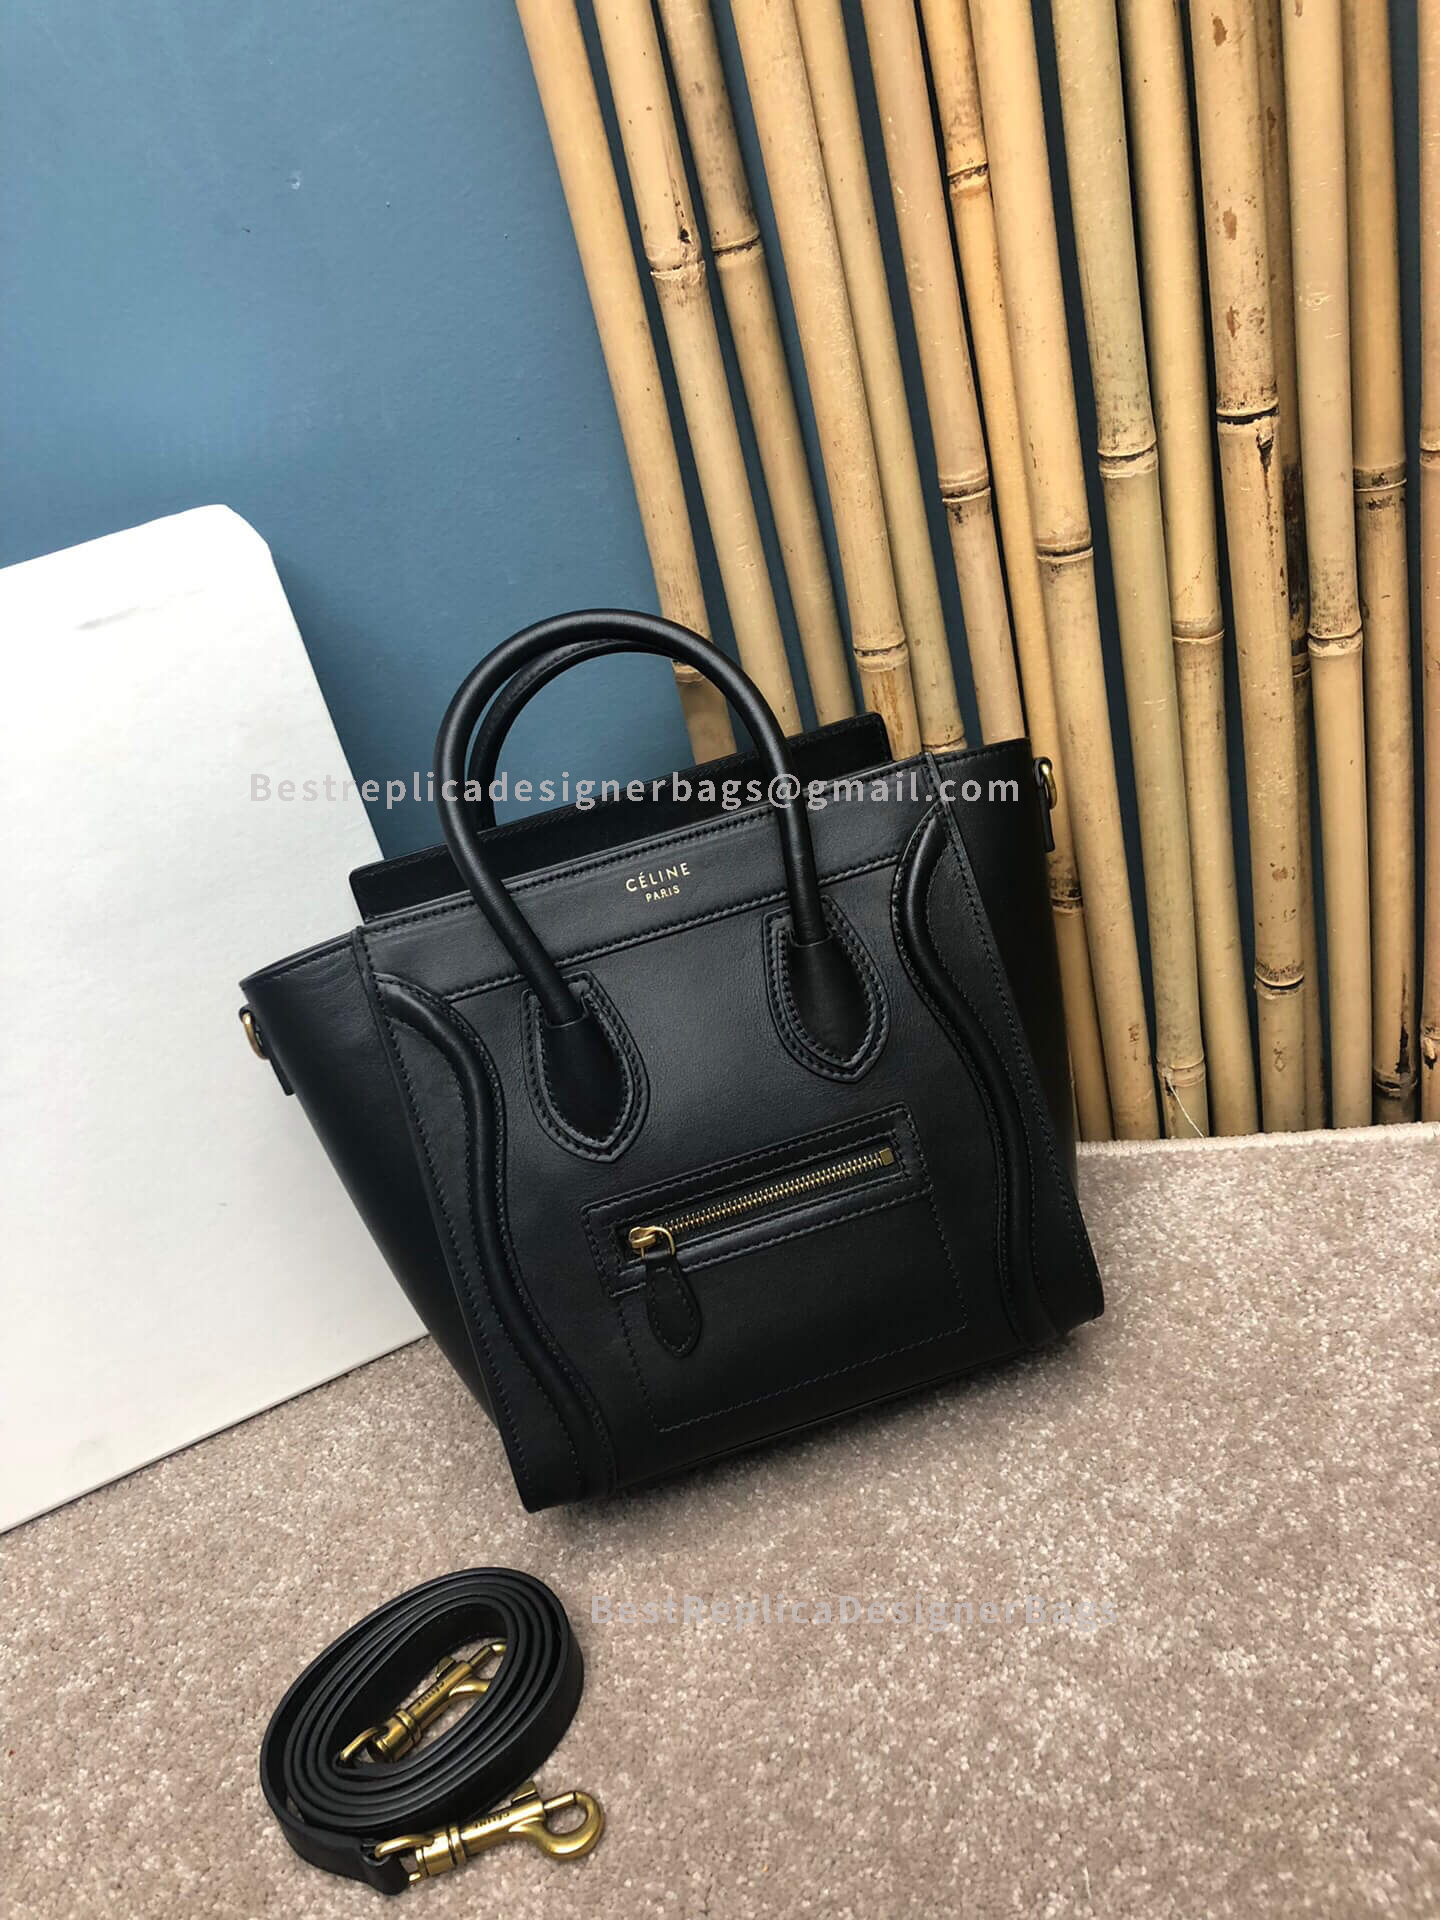 Celine Luggage Nano Bag in Smooth Black Calfskin